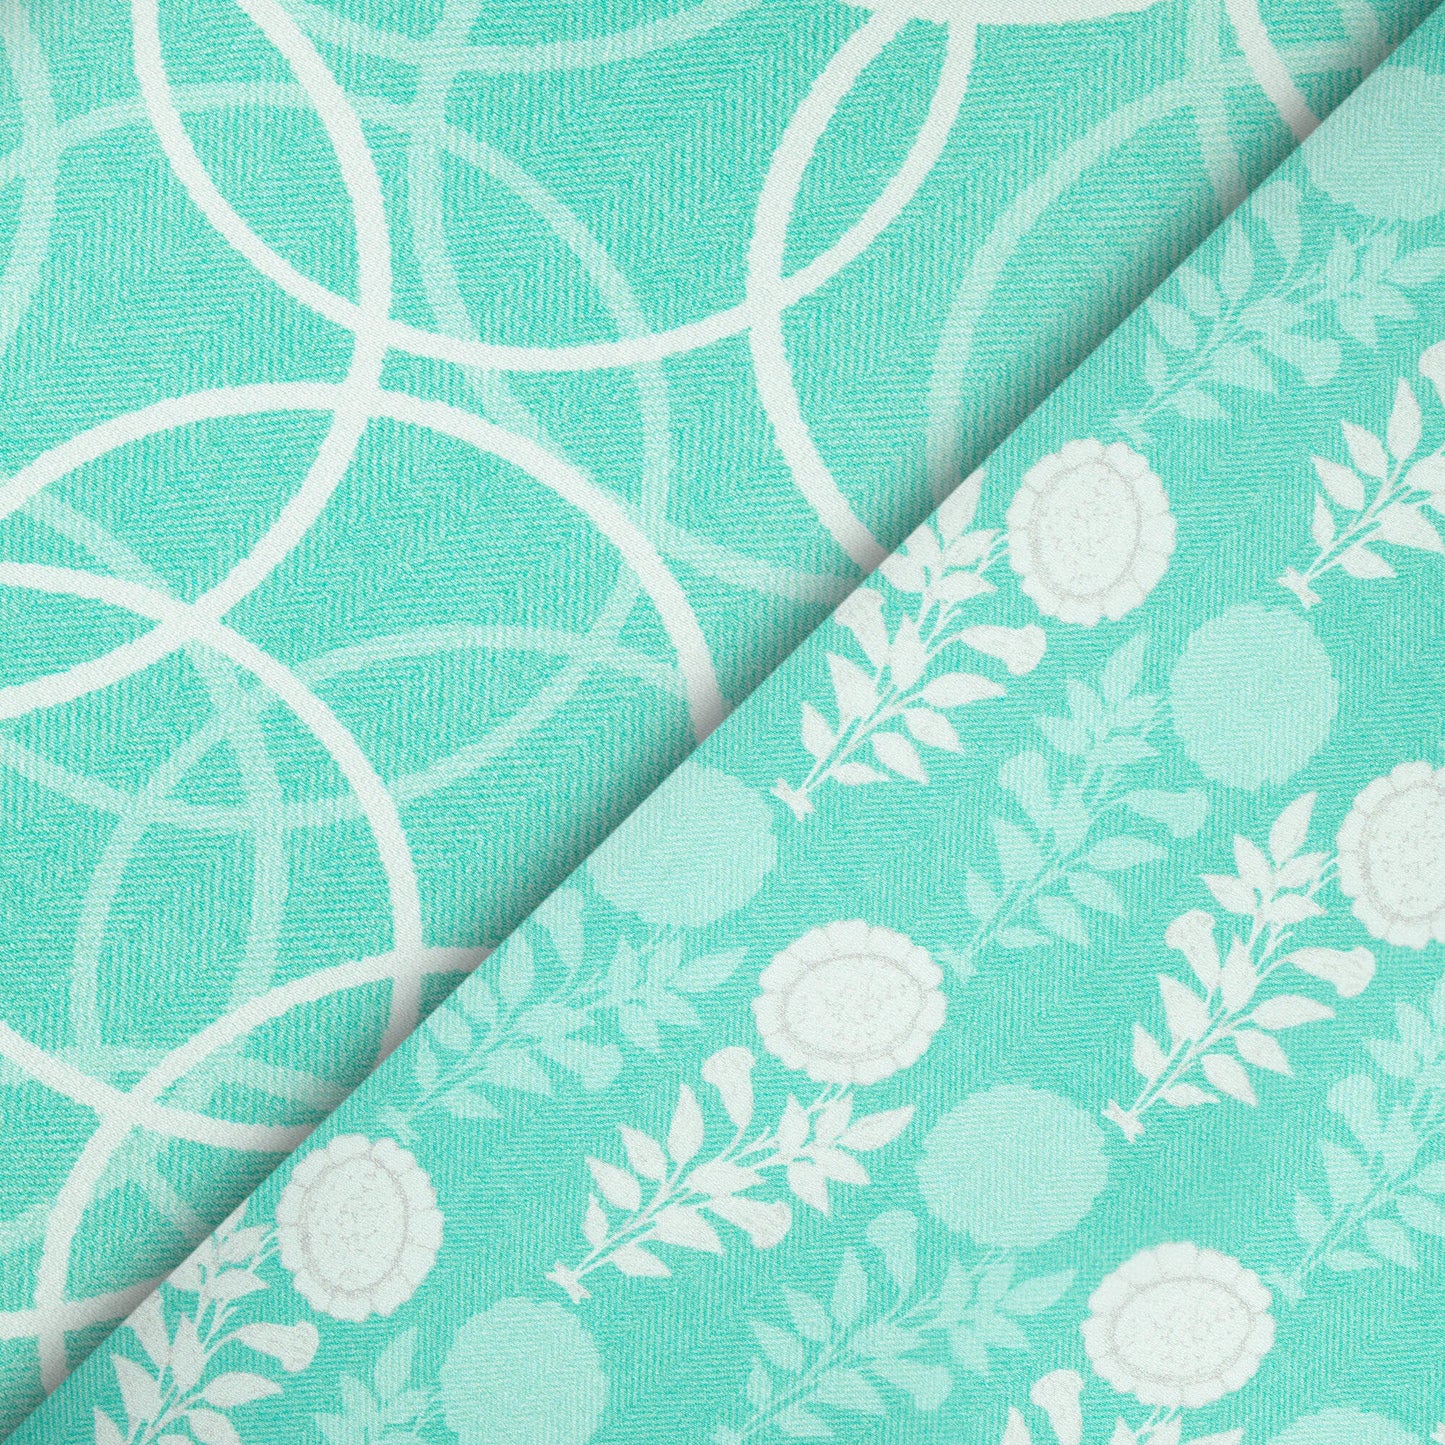 Turquoise And White Floral Pattern Digital Print Premium Lush Satin Fabric